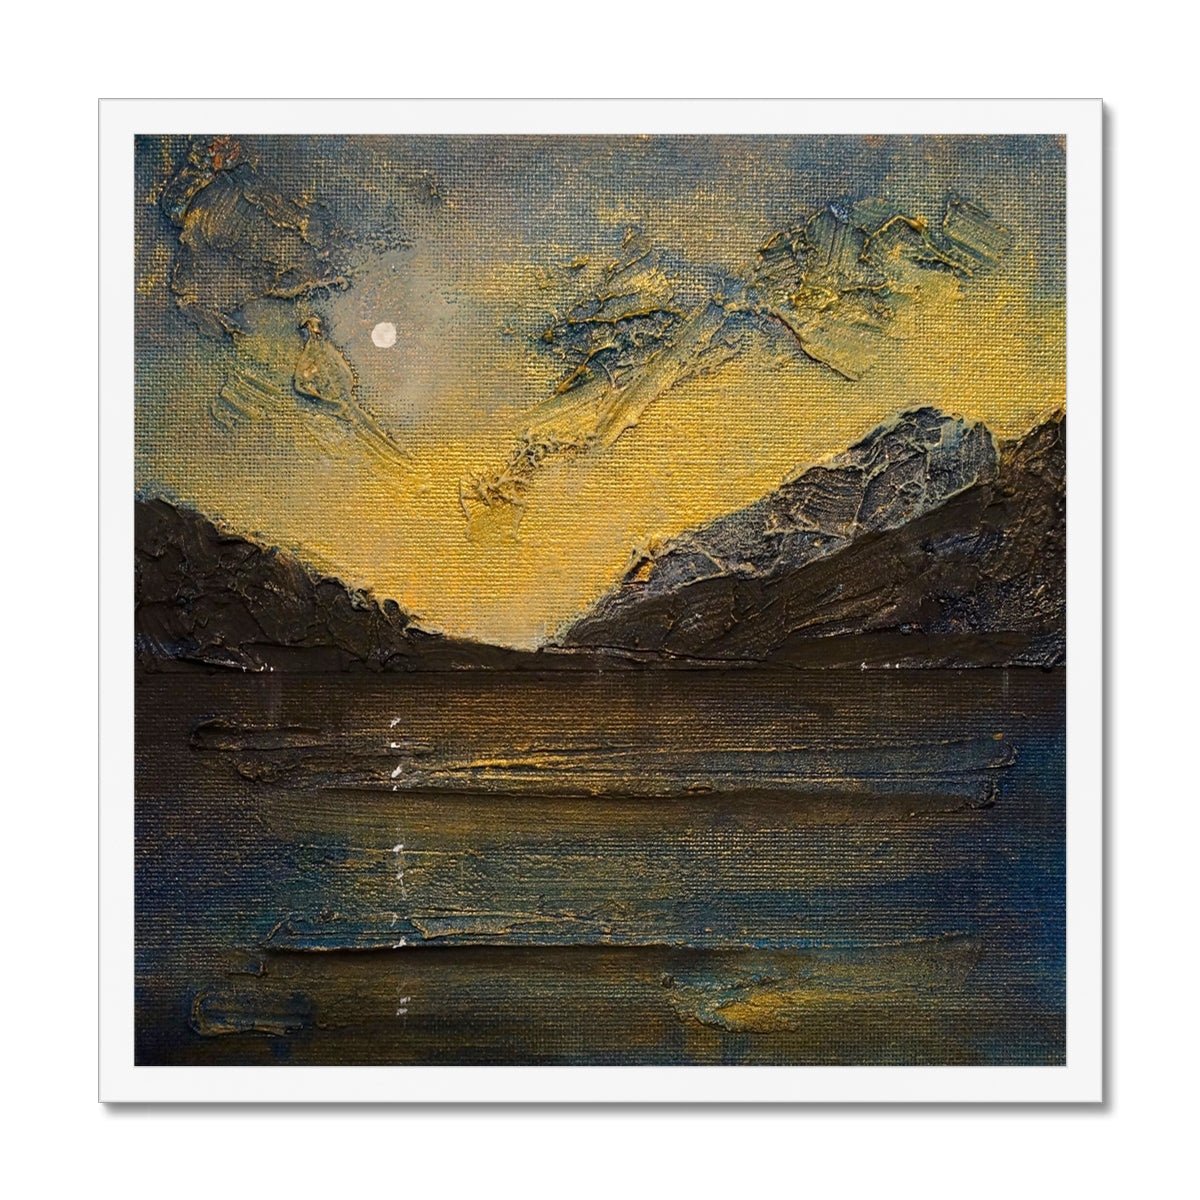 Loch Lomond Moonlight Painting | Framed Prints From Scotland-Framed Prints-Scottish Lochs & Mountains Art Gallery-20"x20"-White Frame-Paintings, Prints, Homeware, Art Gifts From Scotland By Scottish Artist Kevin Hunter